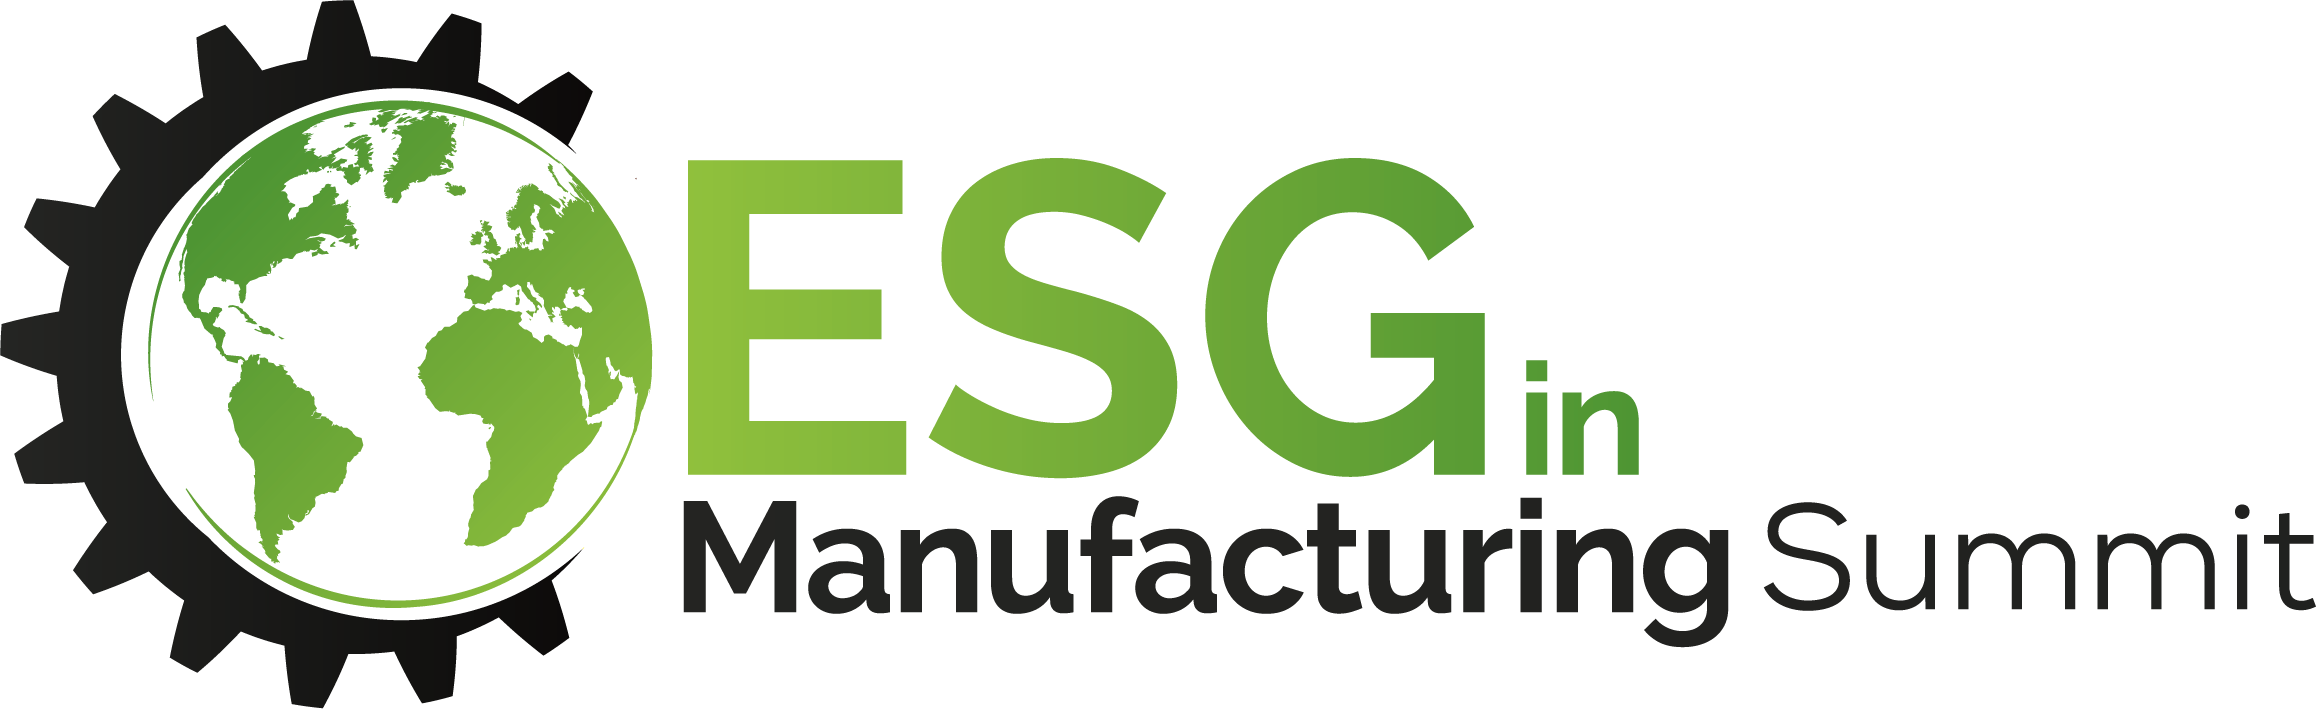 ESG in Manufacturing Summit Logo COL